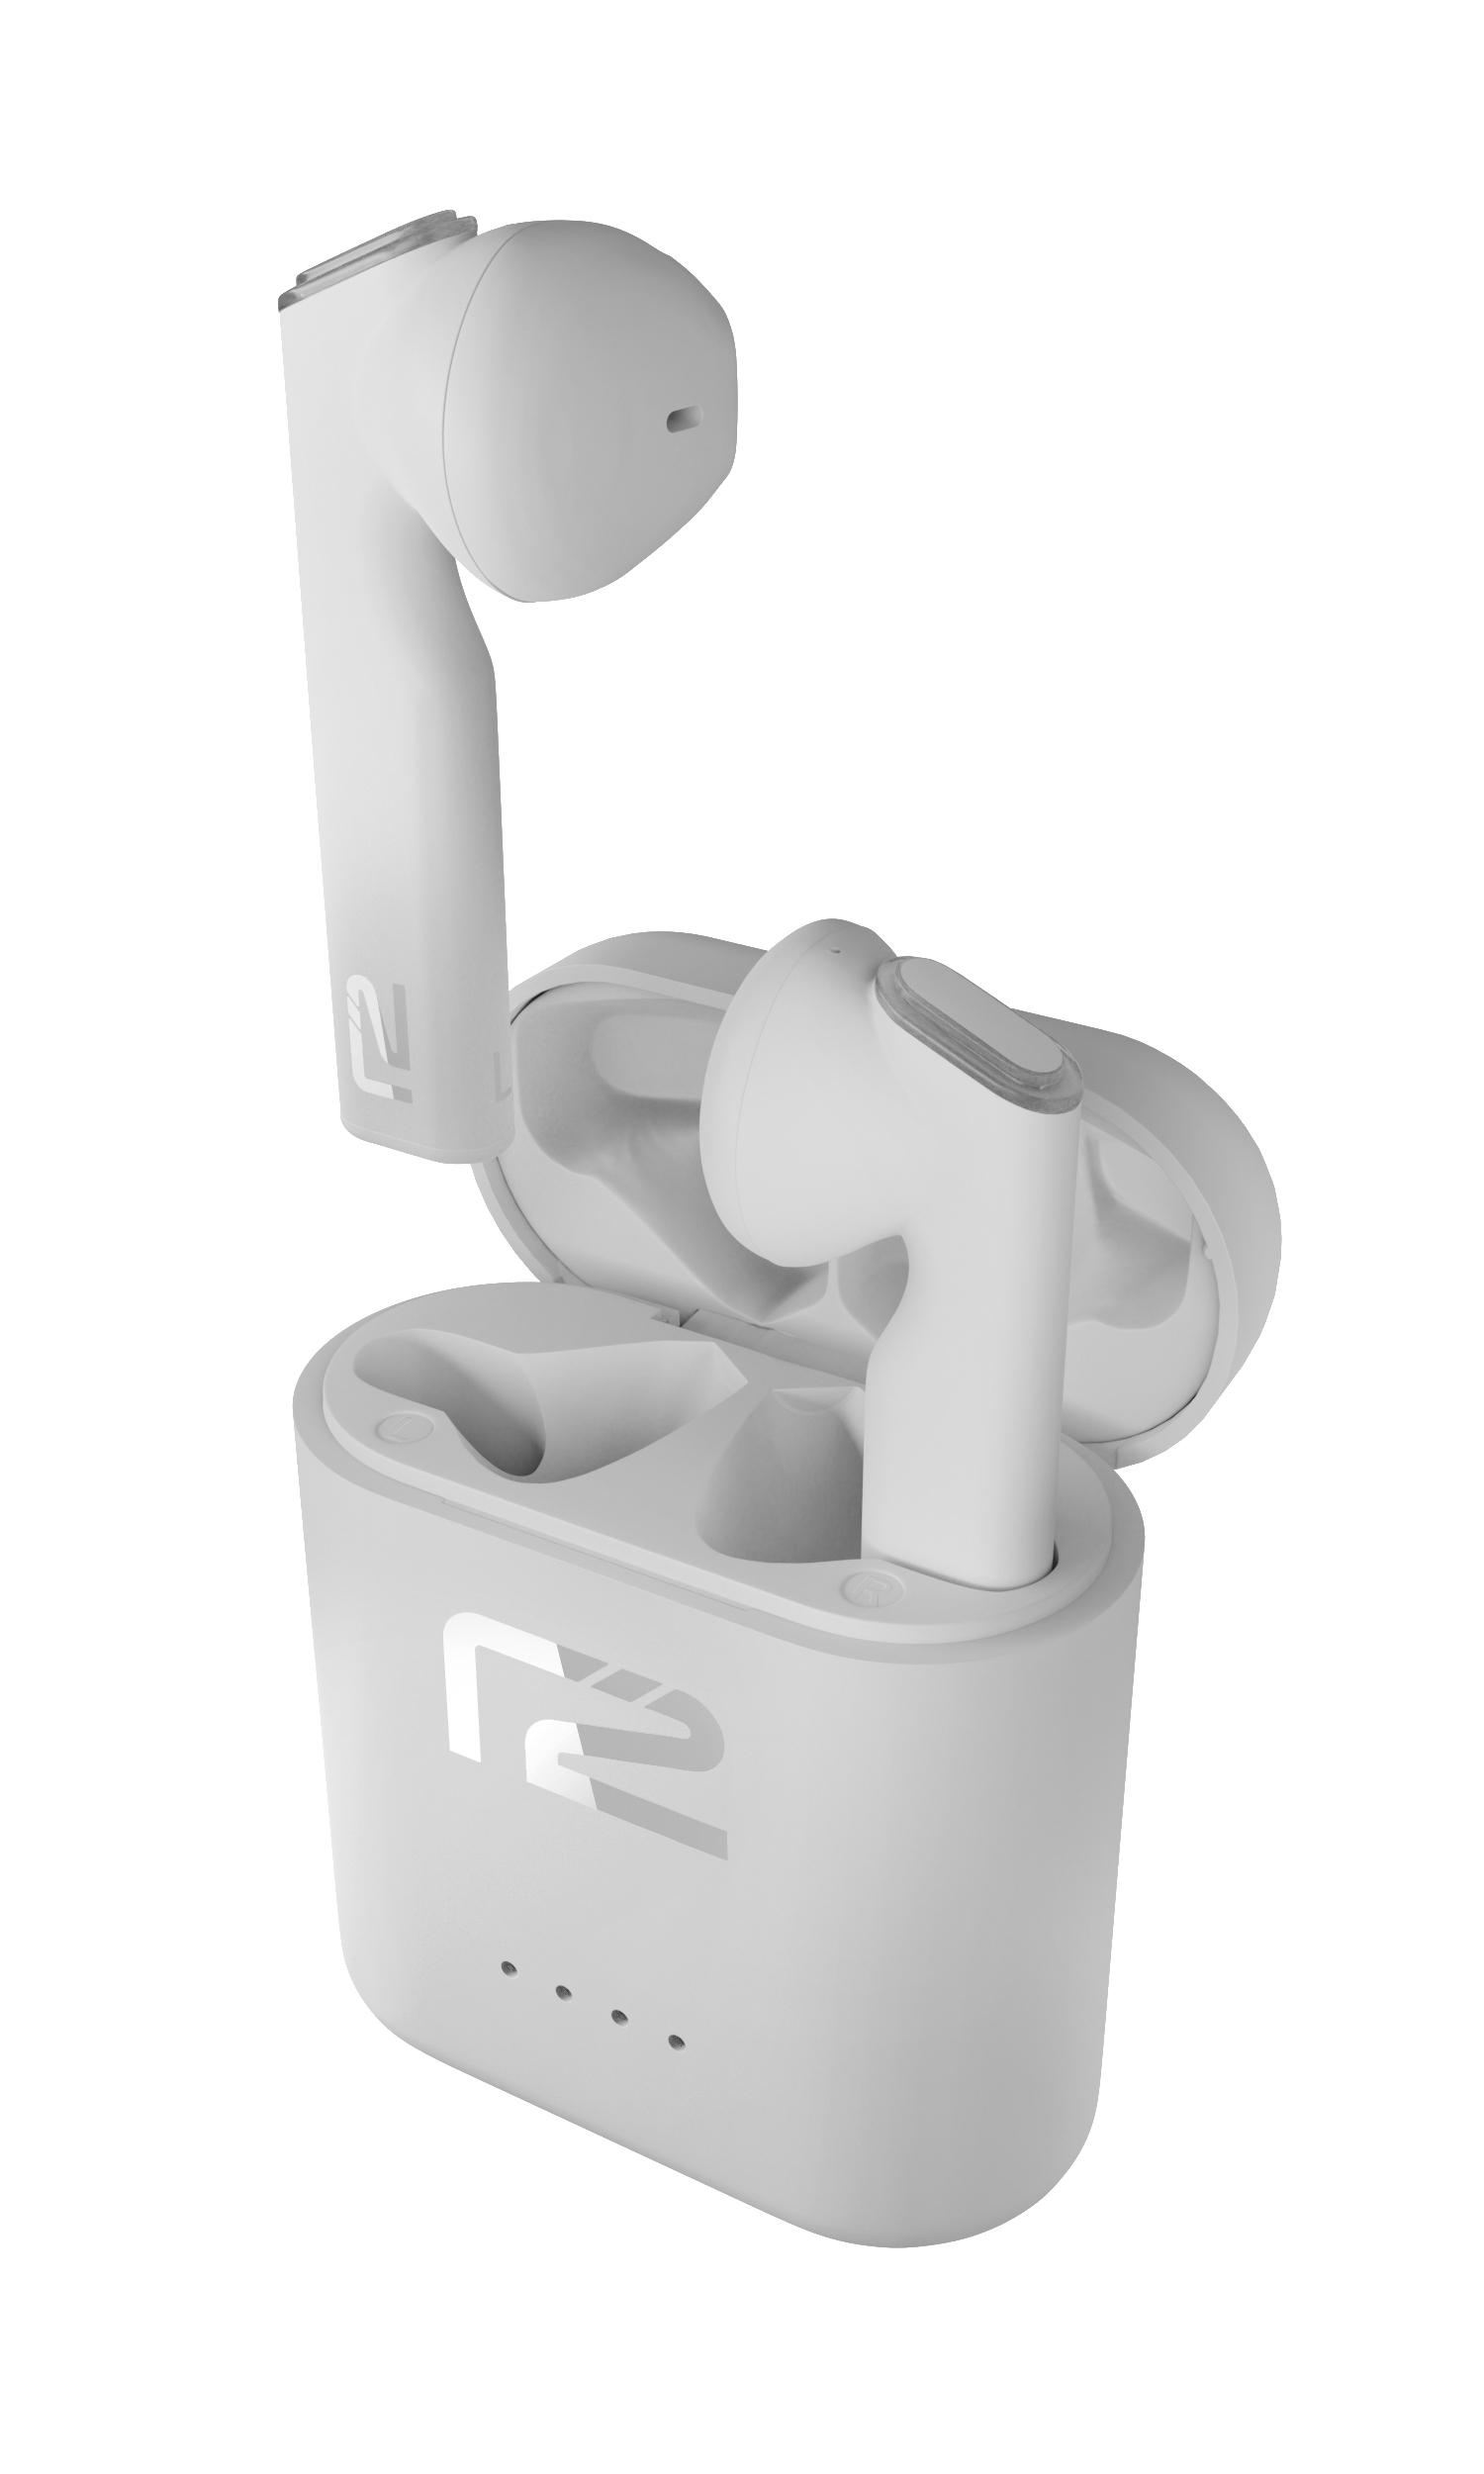 Bluetooth Weiß Air Kopfhörer Pro, READY2MUSIC In-ear Chronos